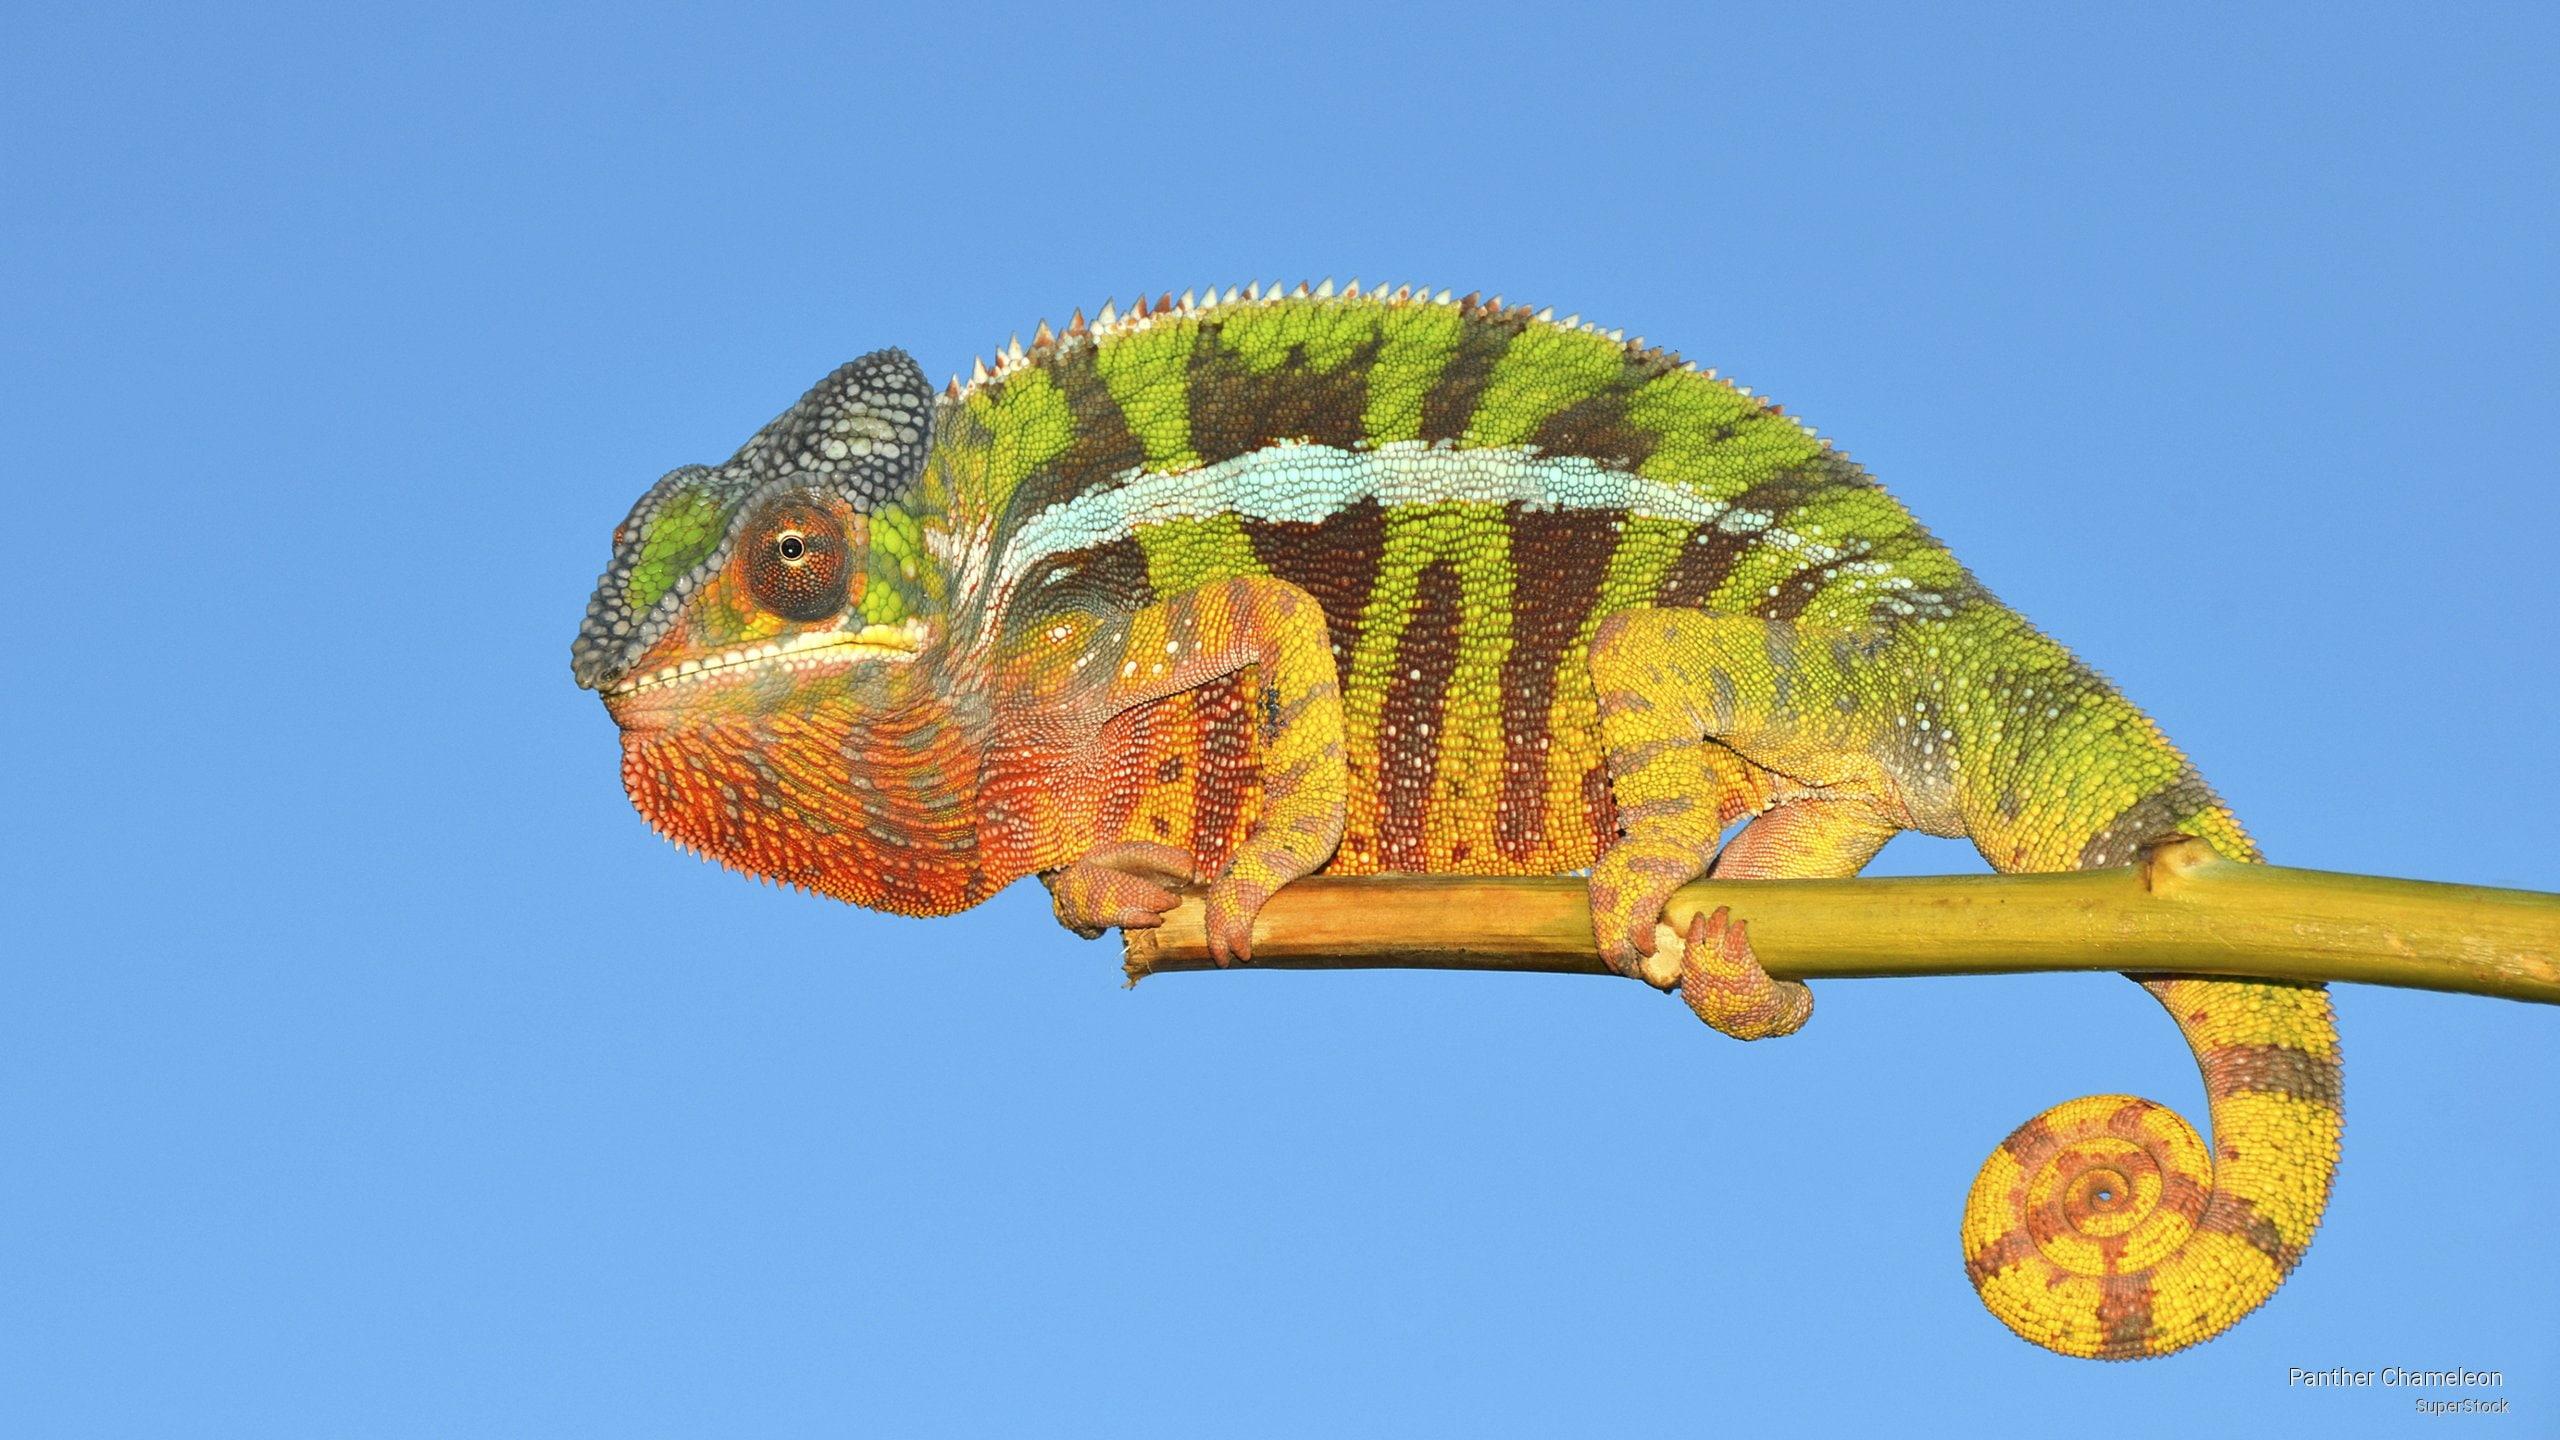 Panther chameleon 1080P, 2K, 4K, 5K HD wallpaper free